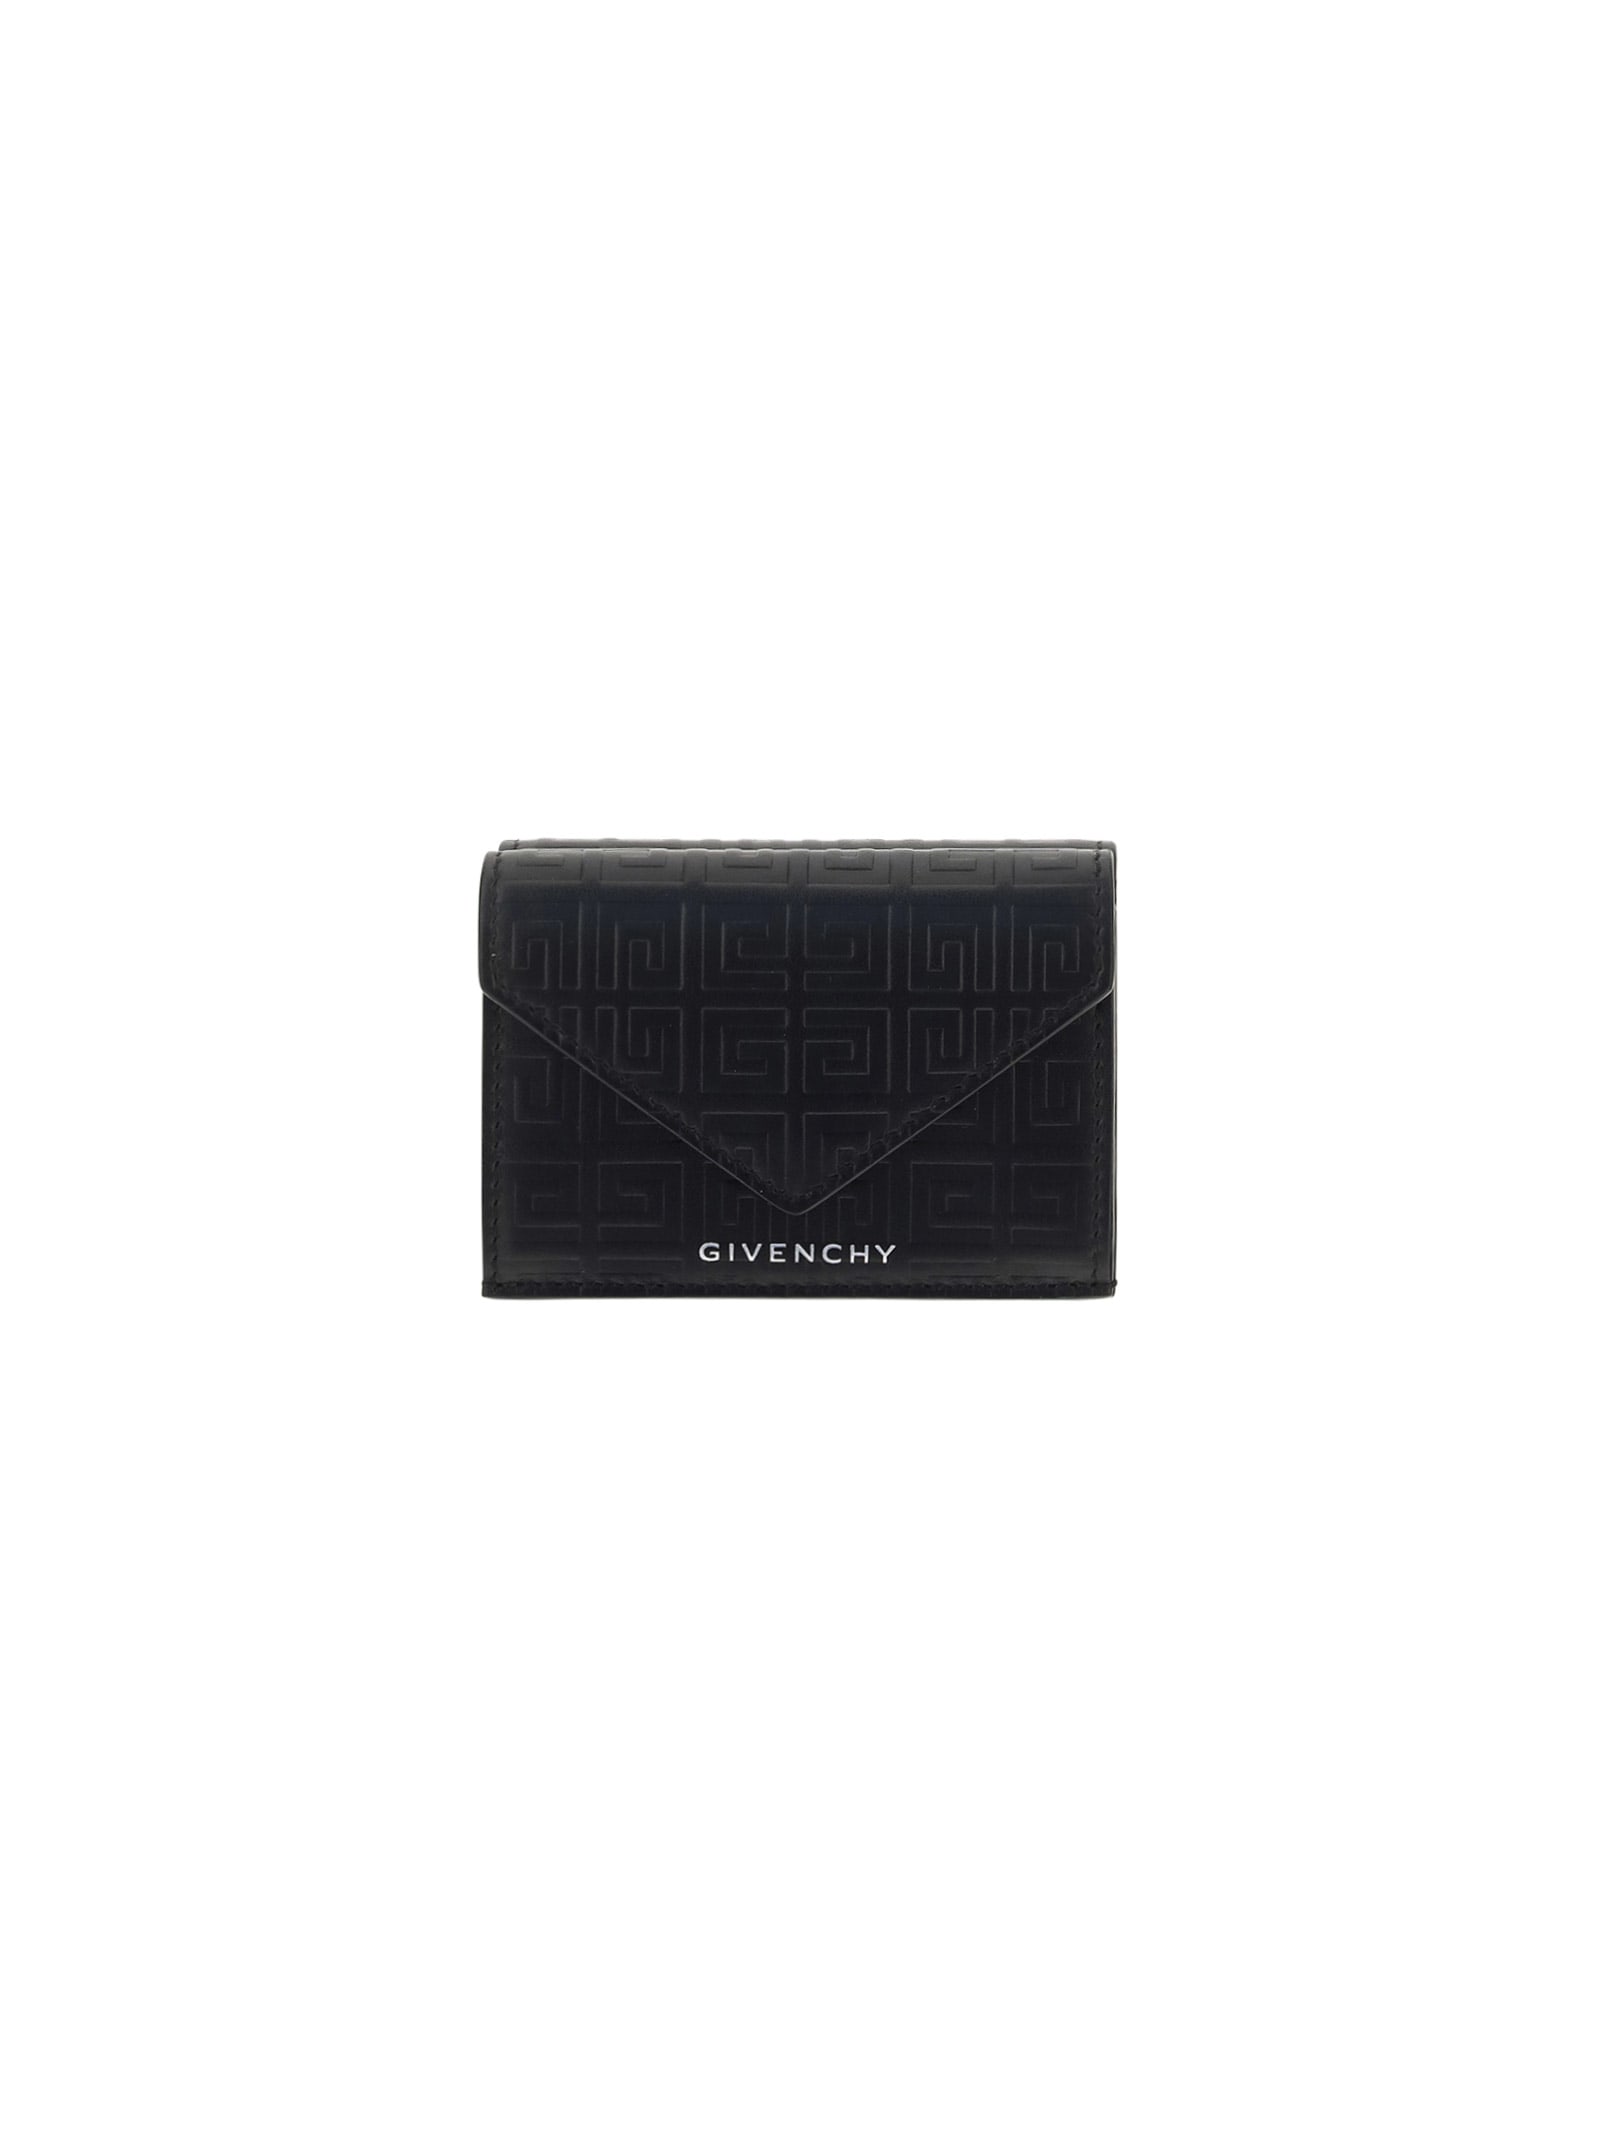 Givenchy G-cut Compact Wallet